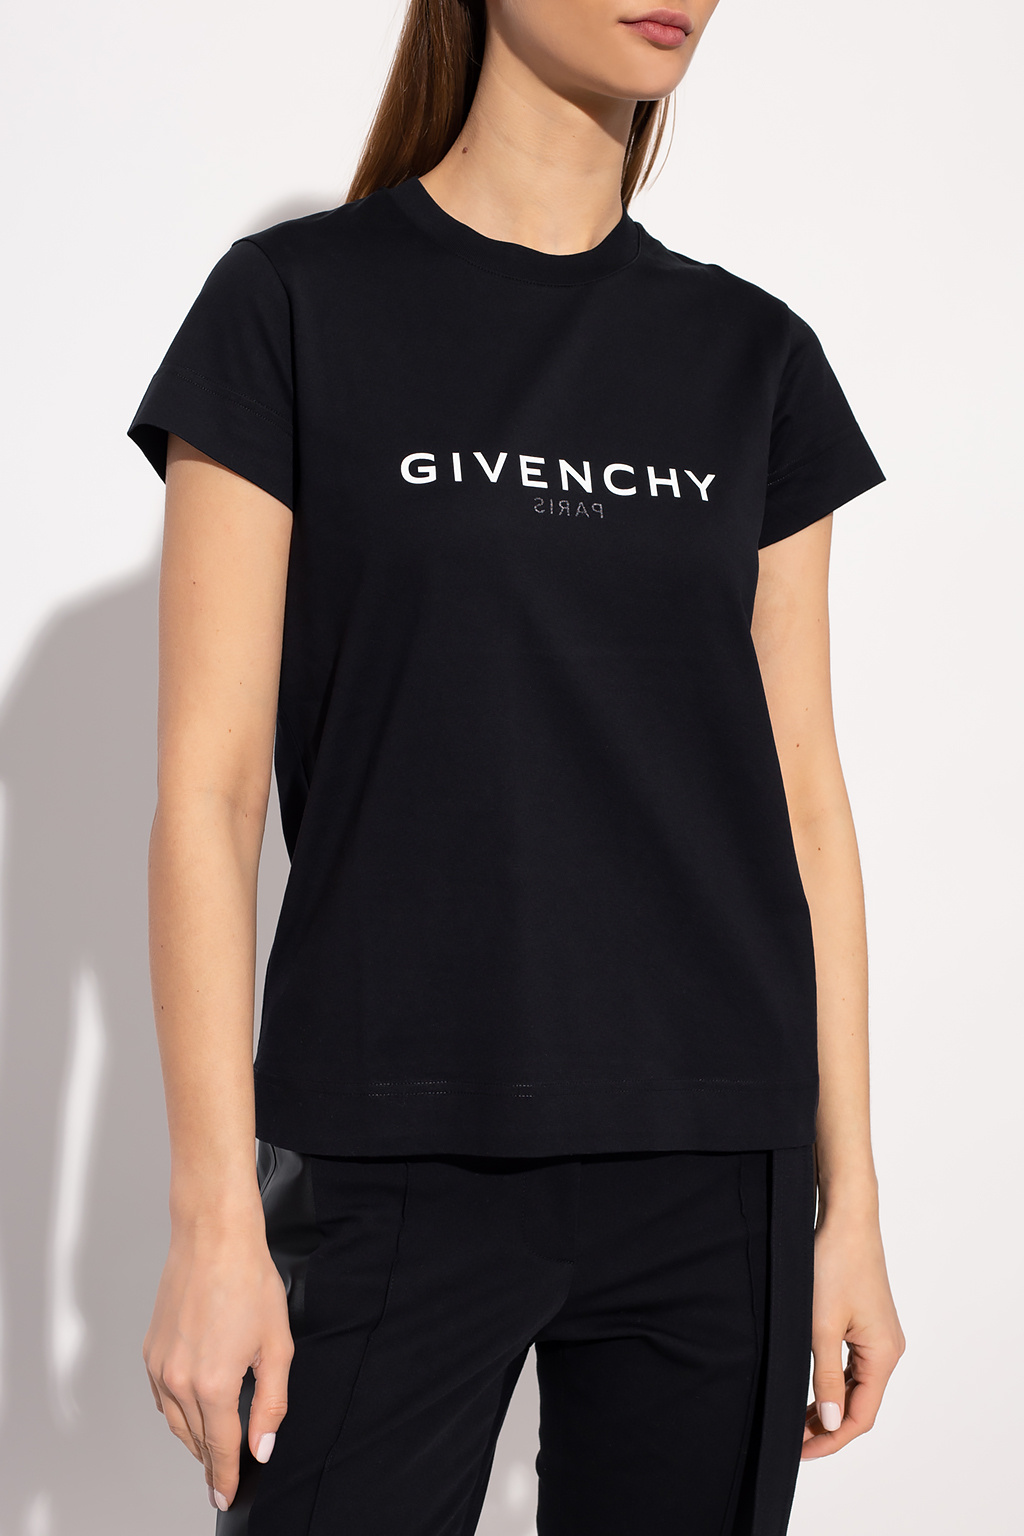 givenchy t shirt women's